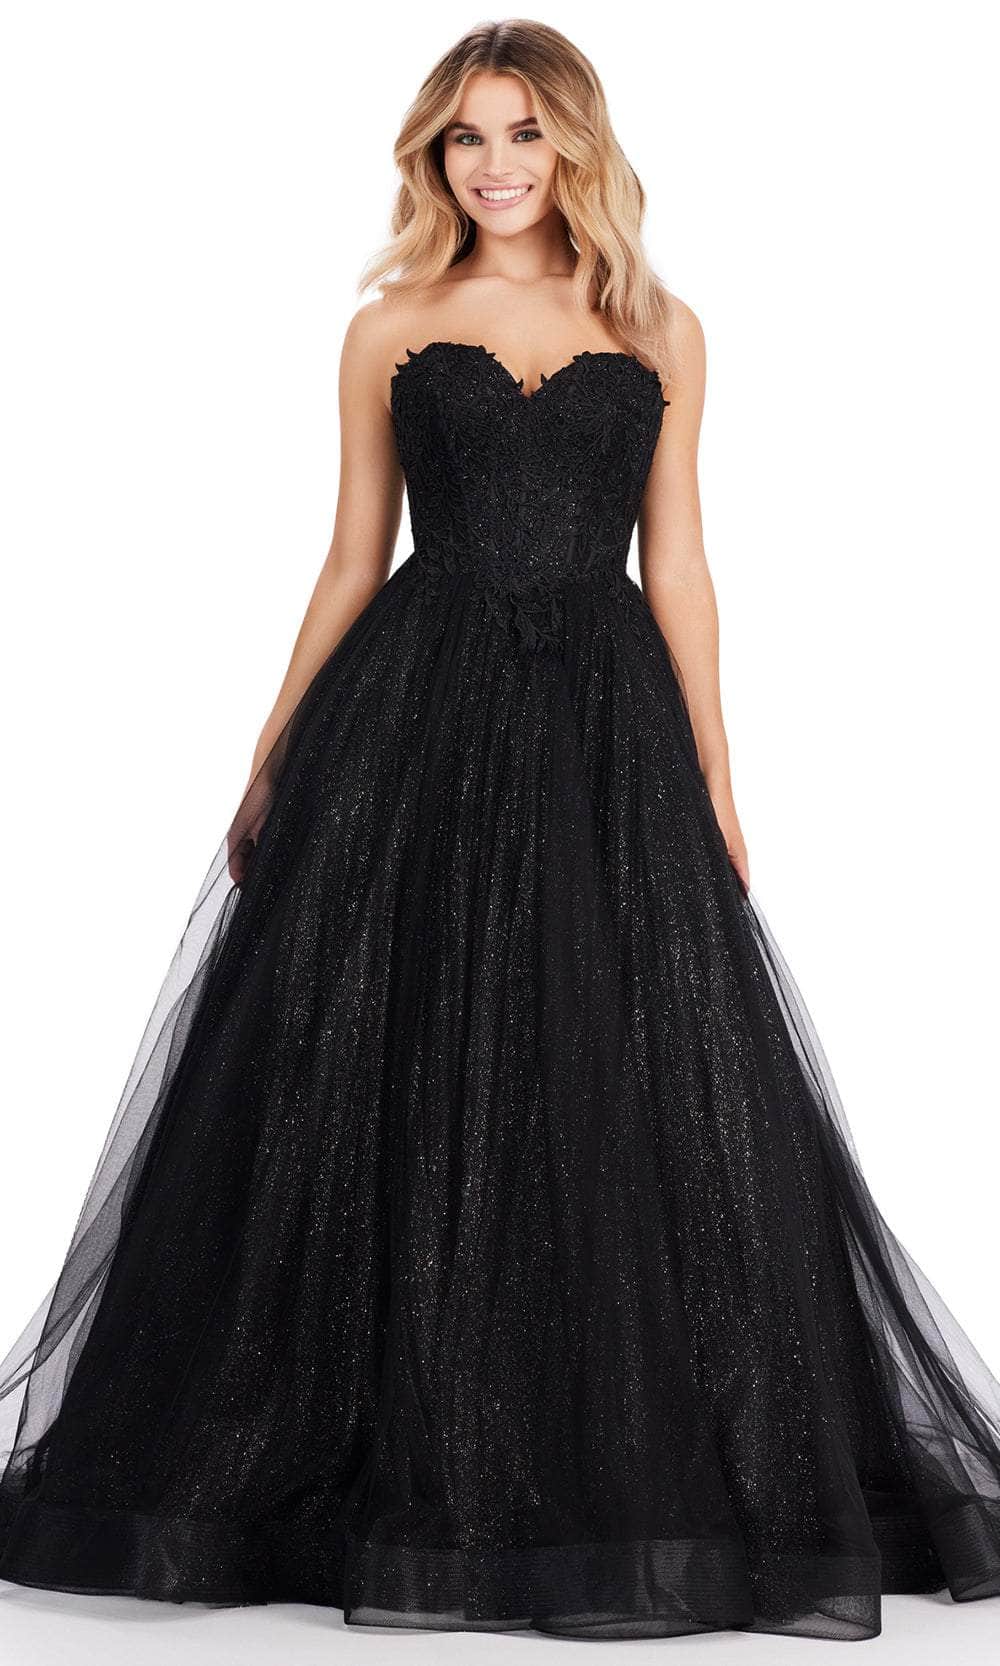 Image of Ashley Lauren 11518 - Glitter Tulle A-Line Prom Dress